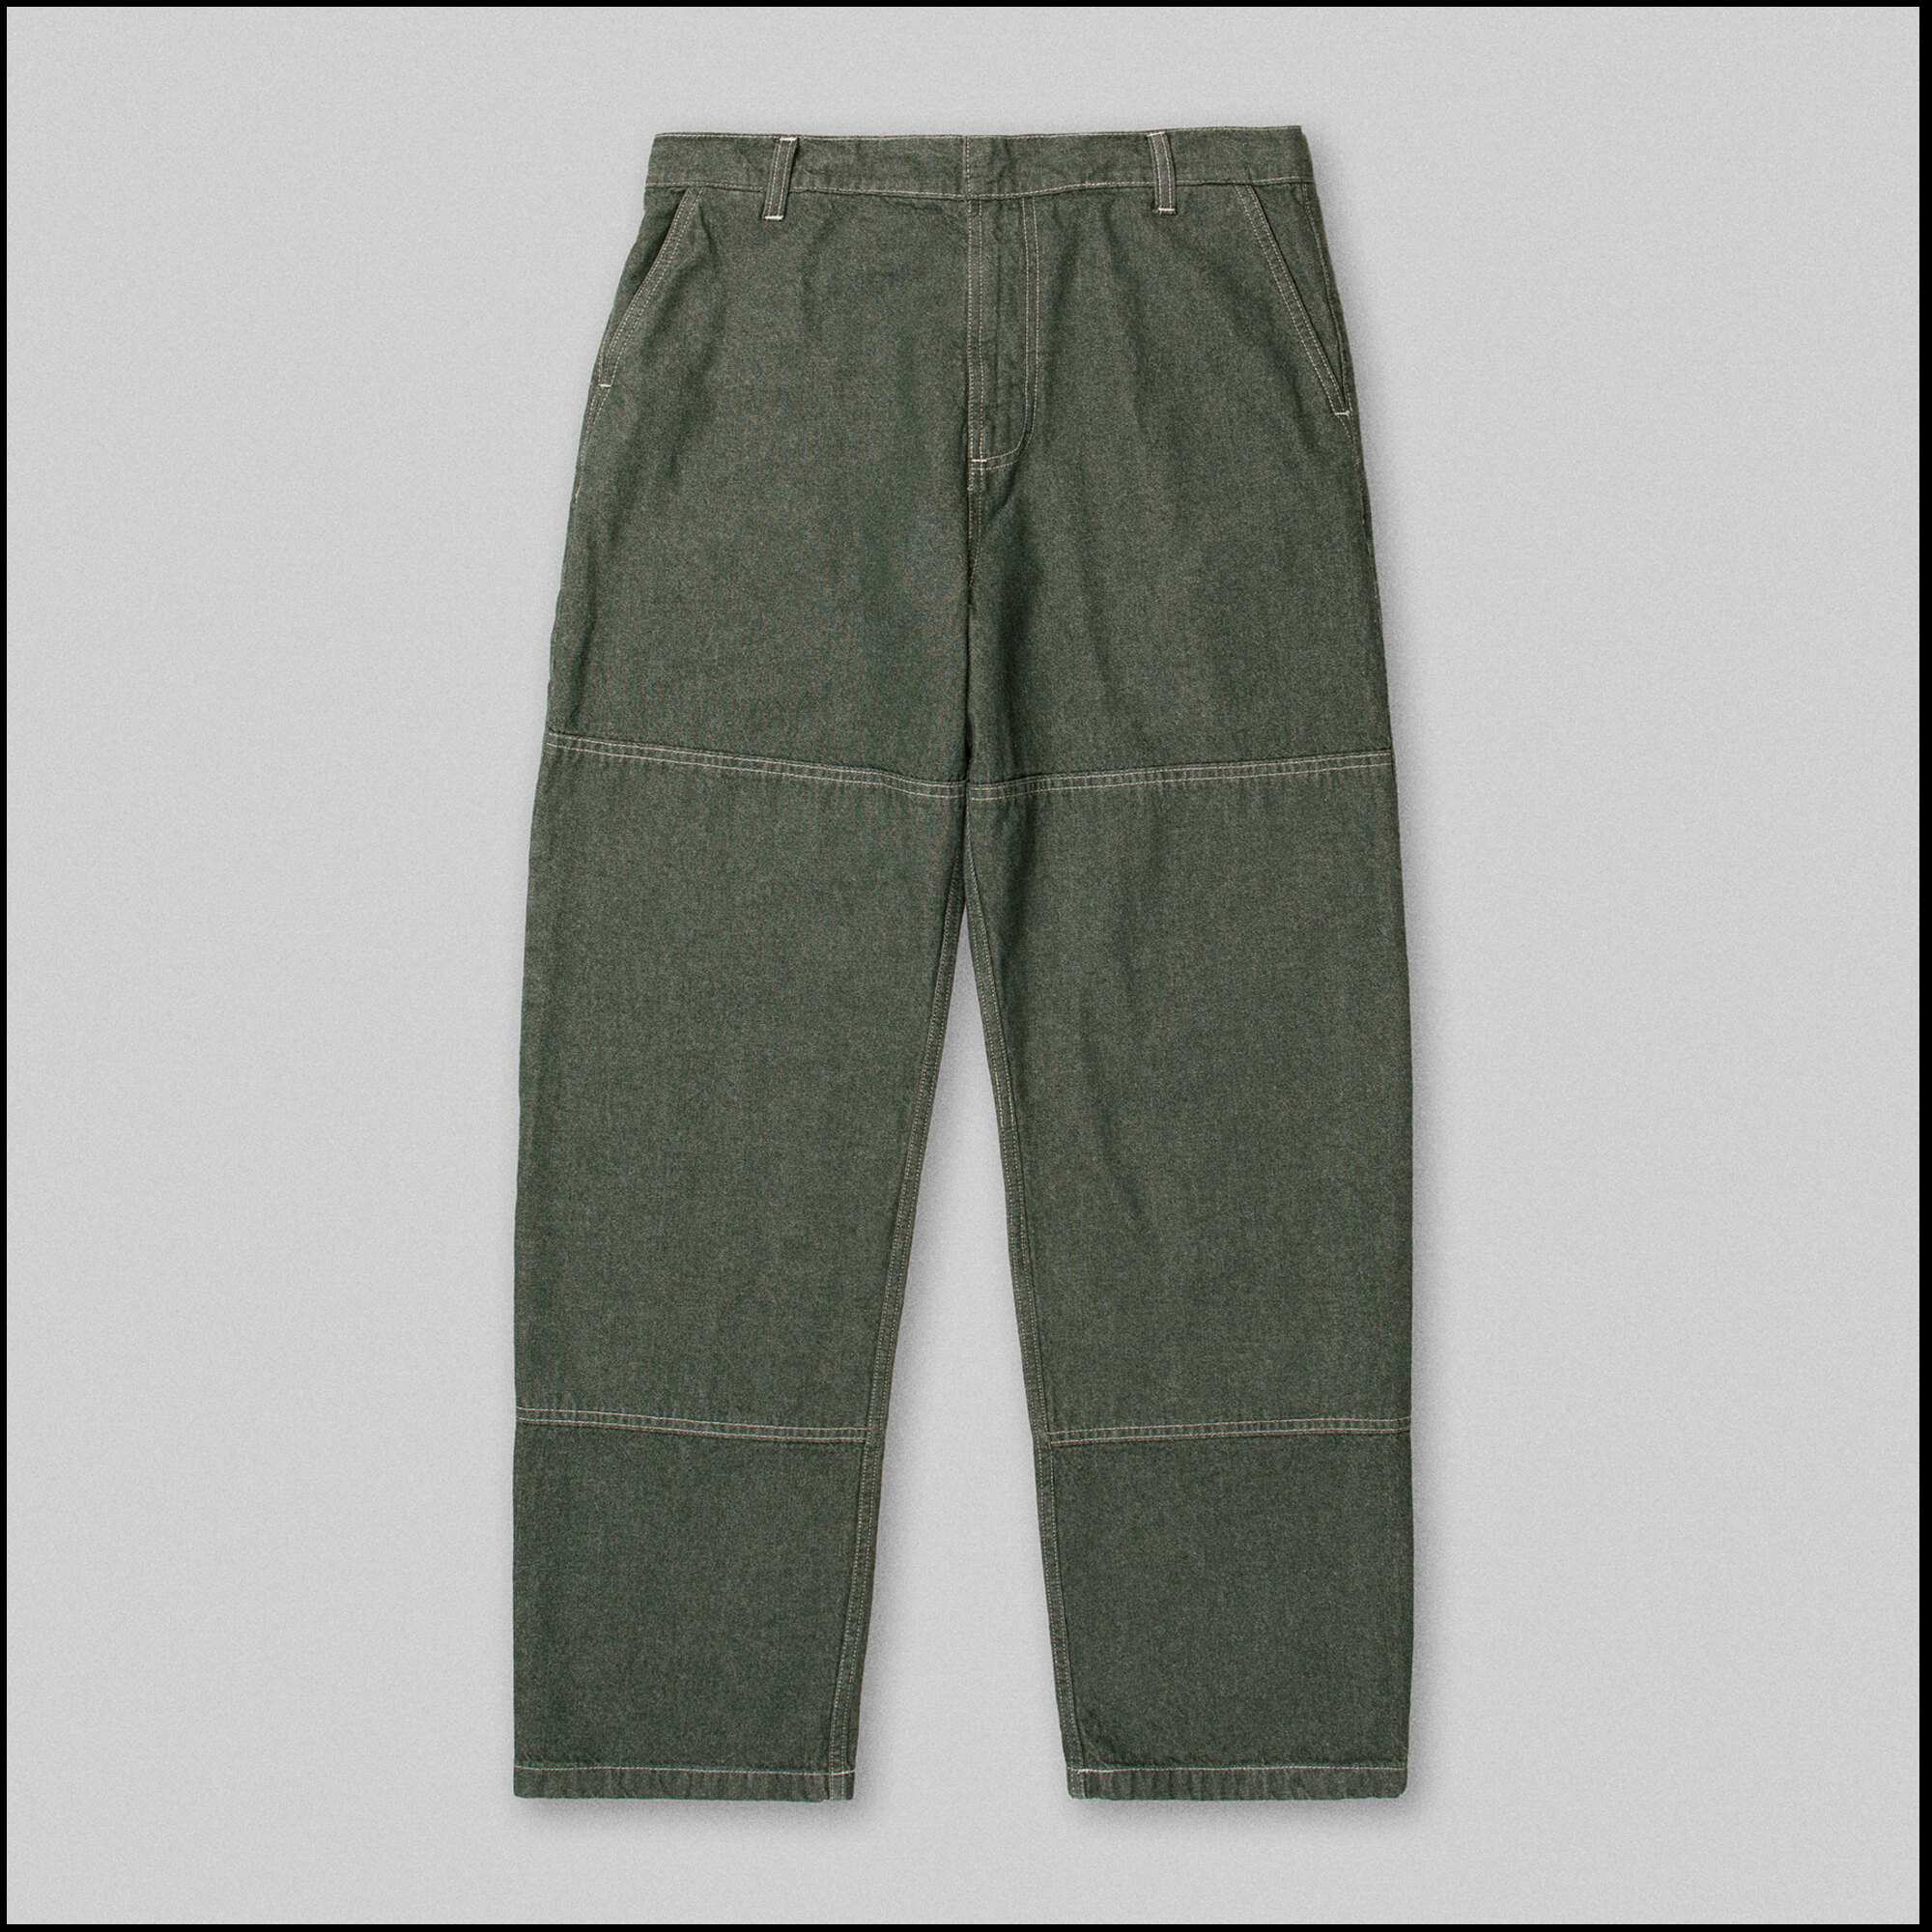 4 POCKET Pants by Arpenteur in Green color